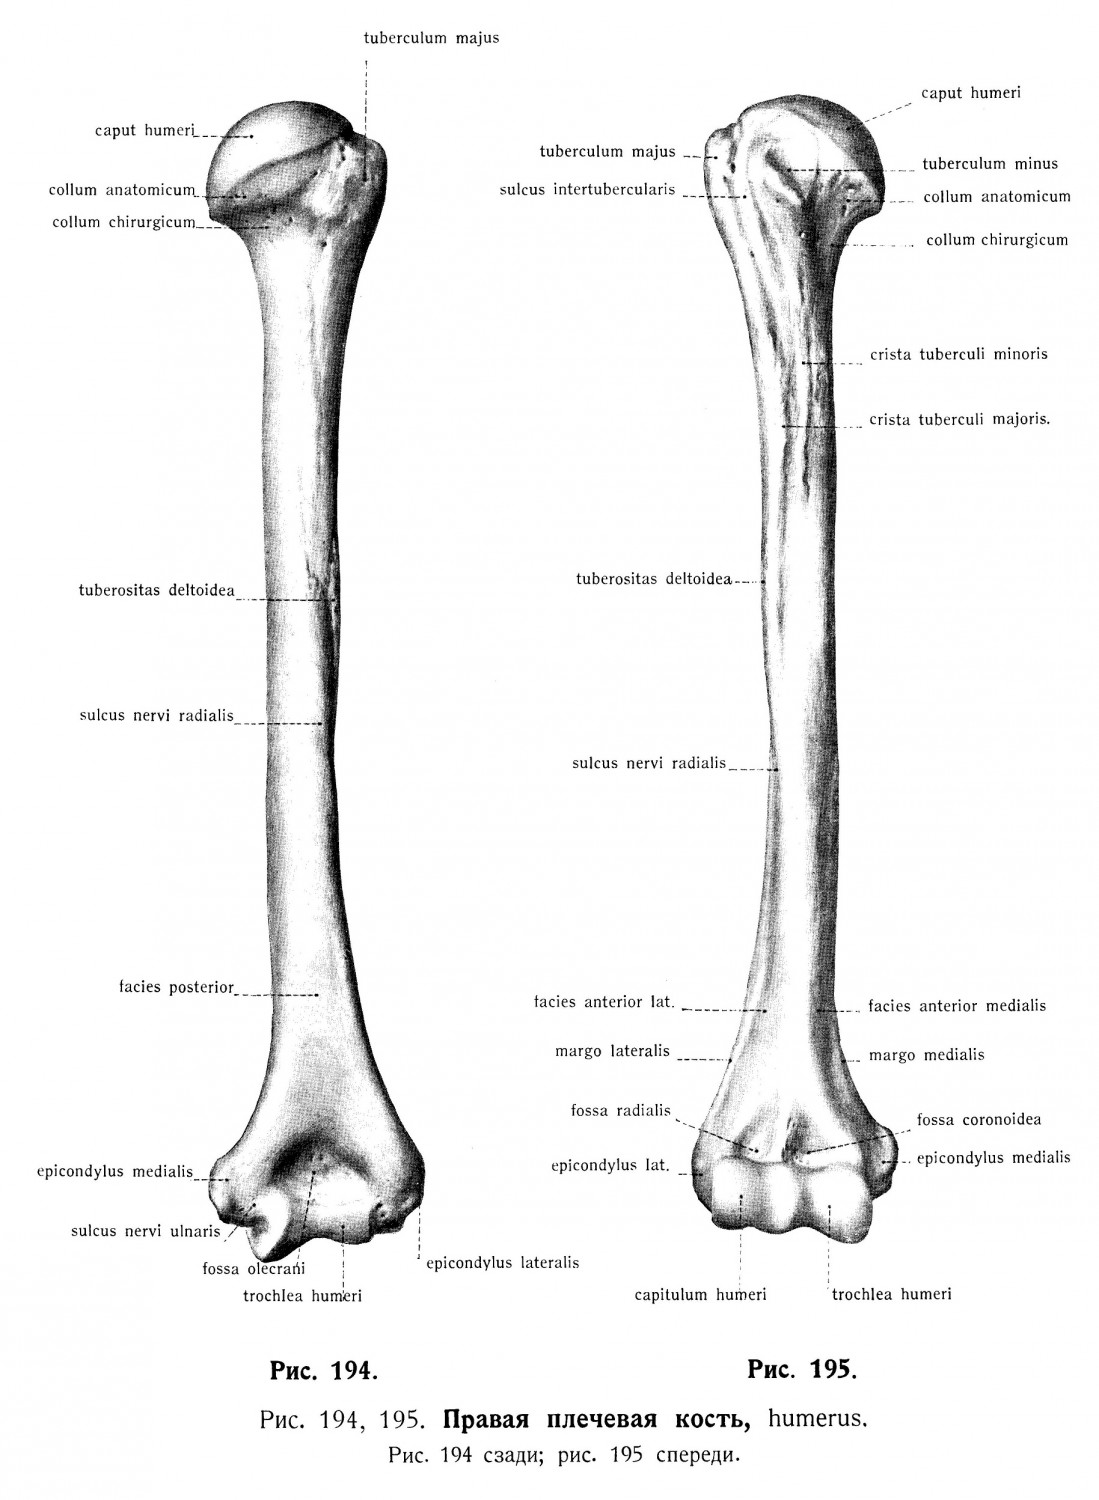 Плечевая кость, humerus